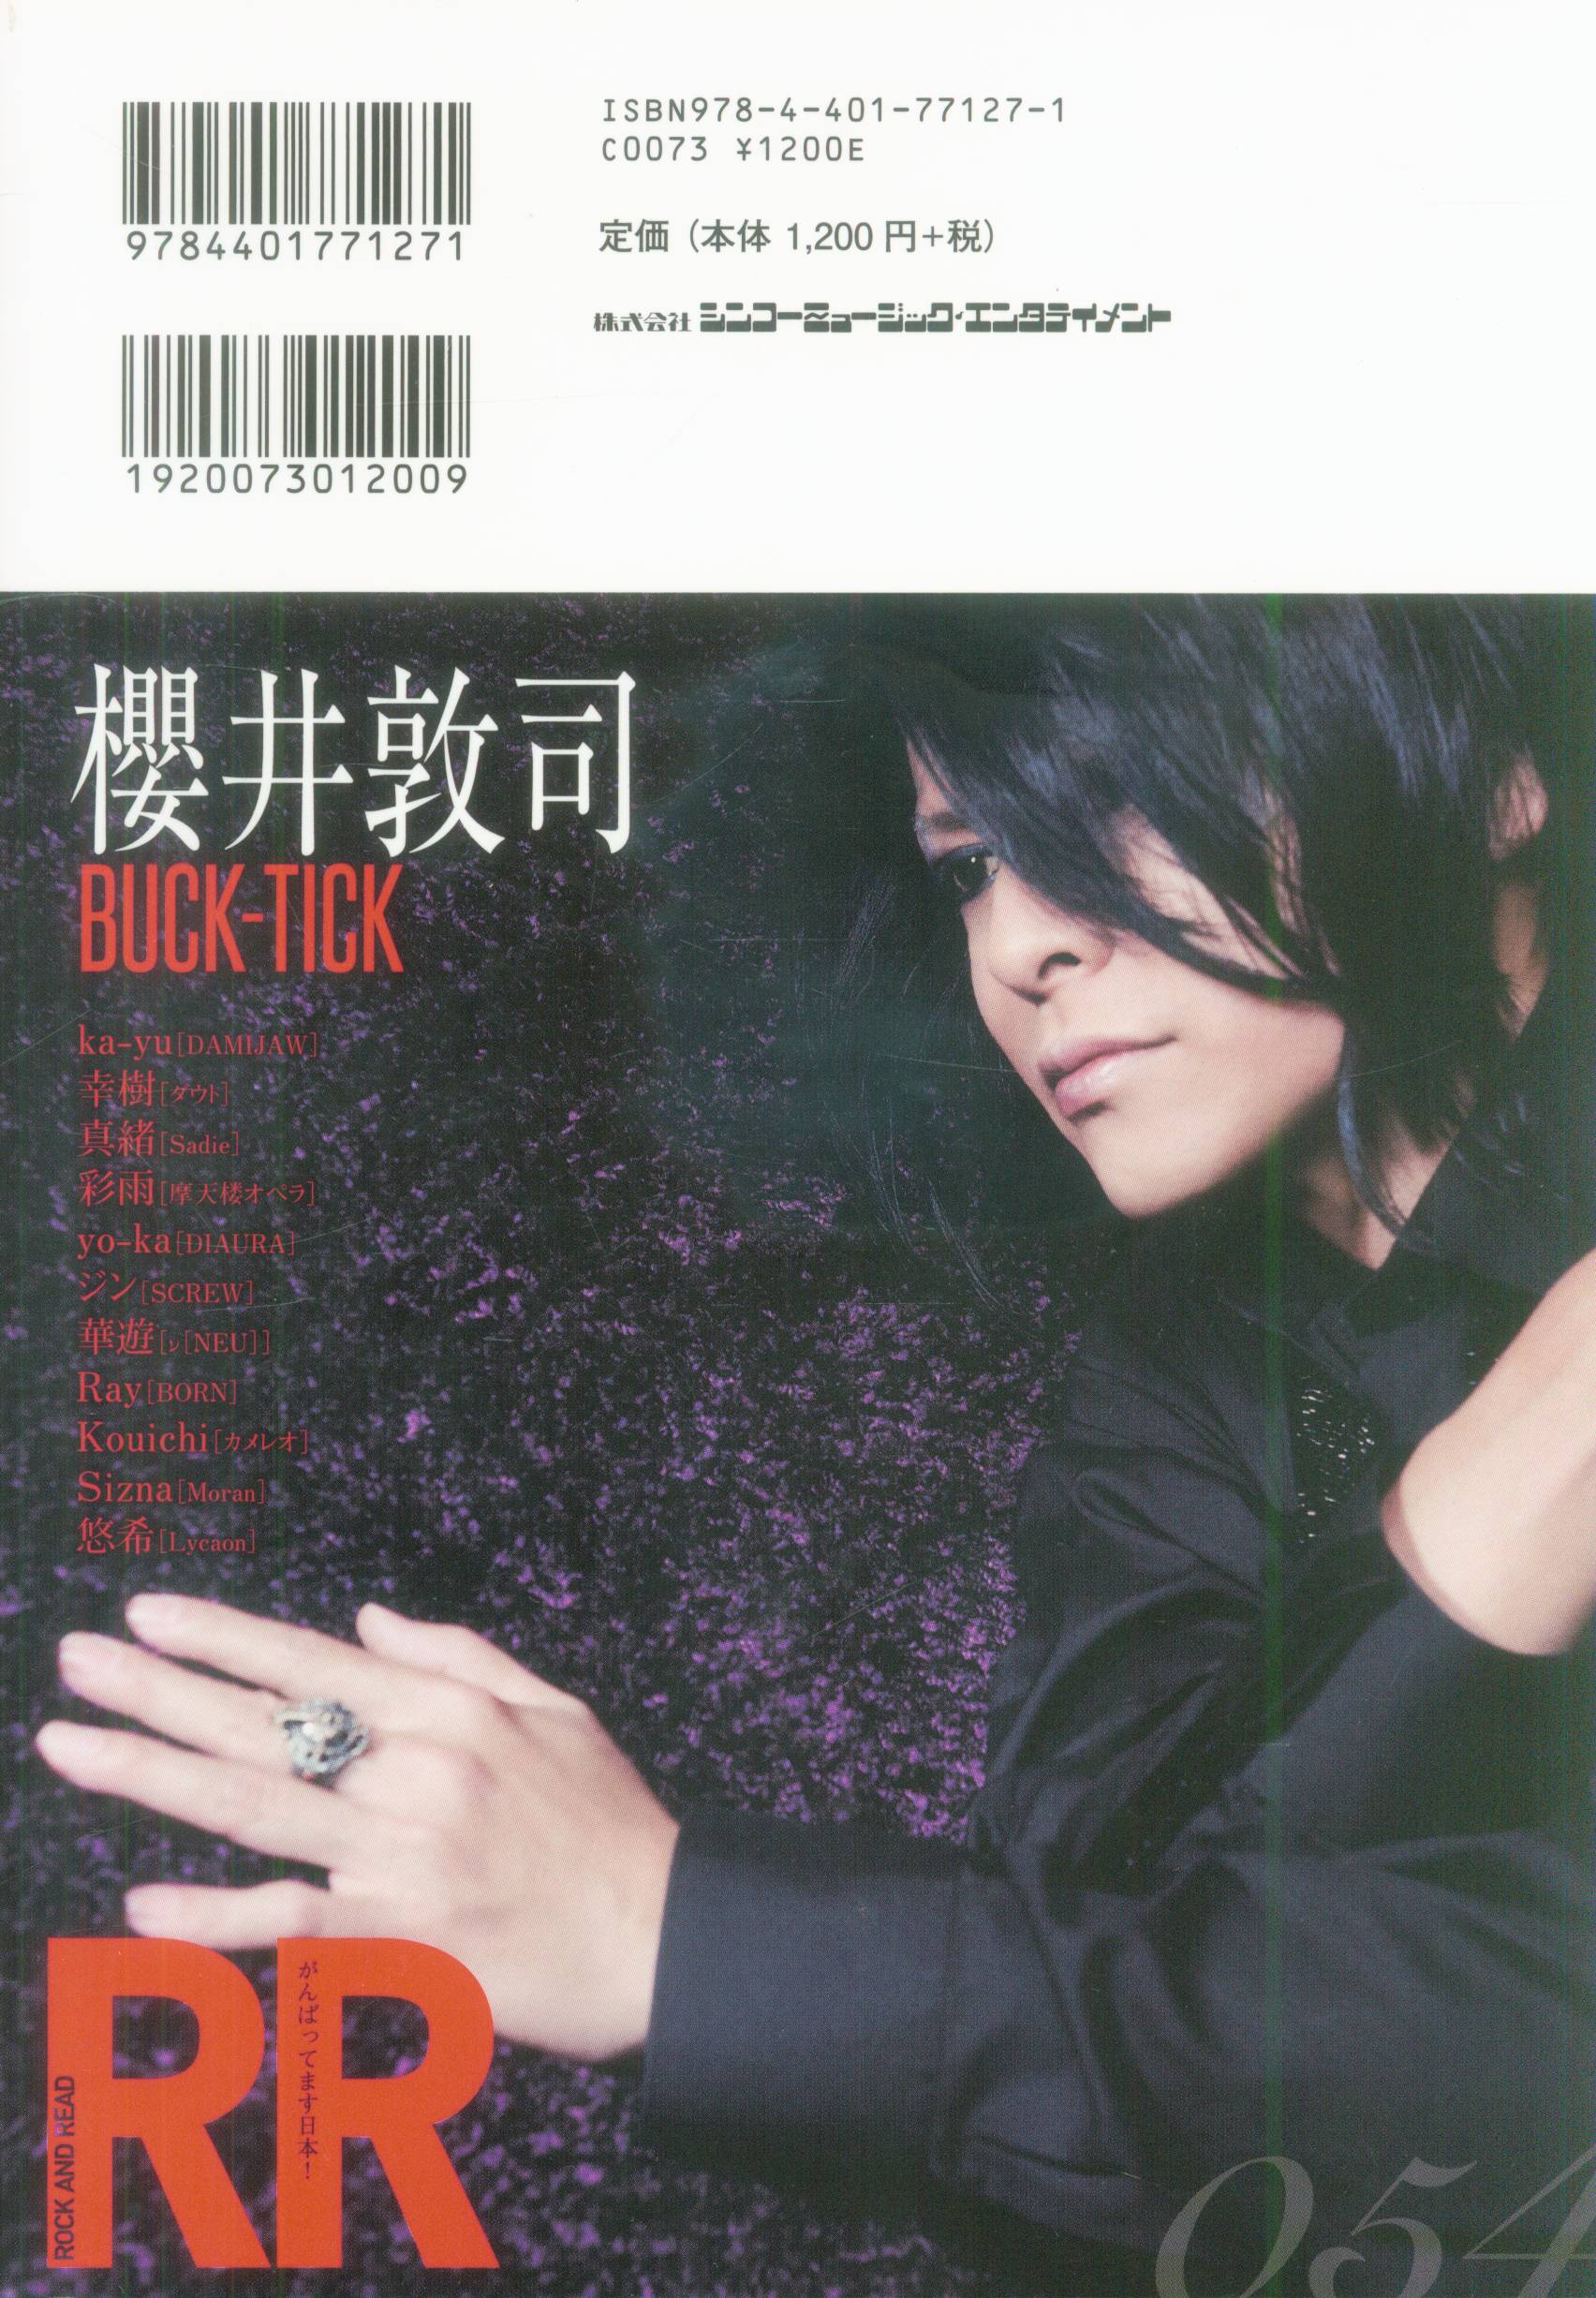 ROCK AND READ/042 2012年6月/BUCK-TICK 櫻井敦司/INORAN/42 - 雑誌